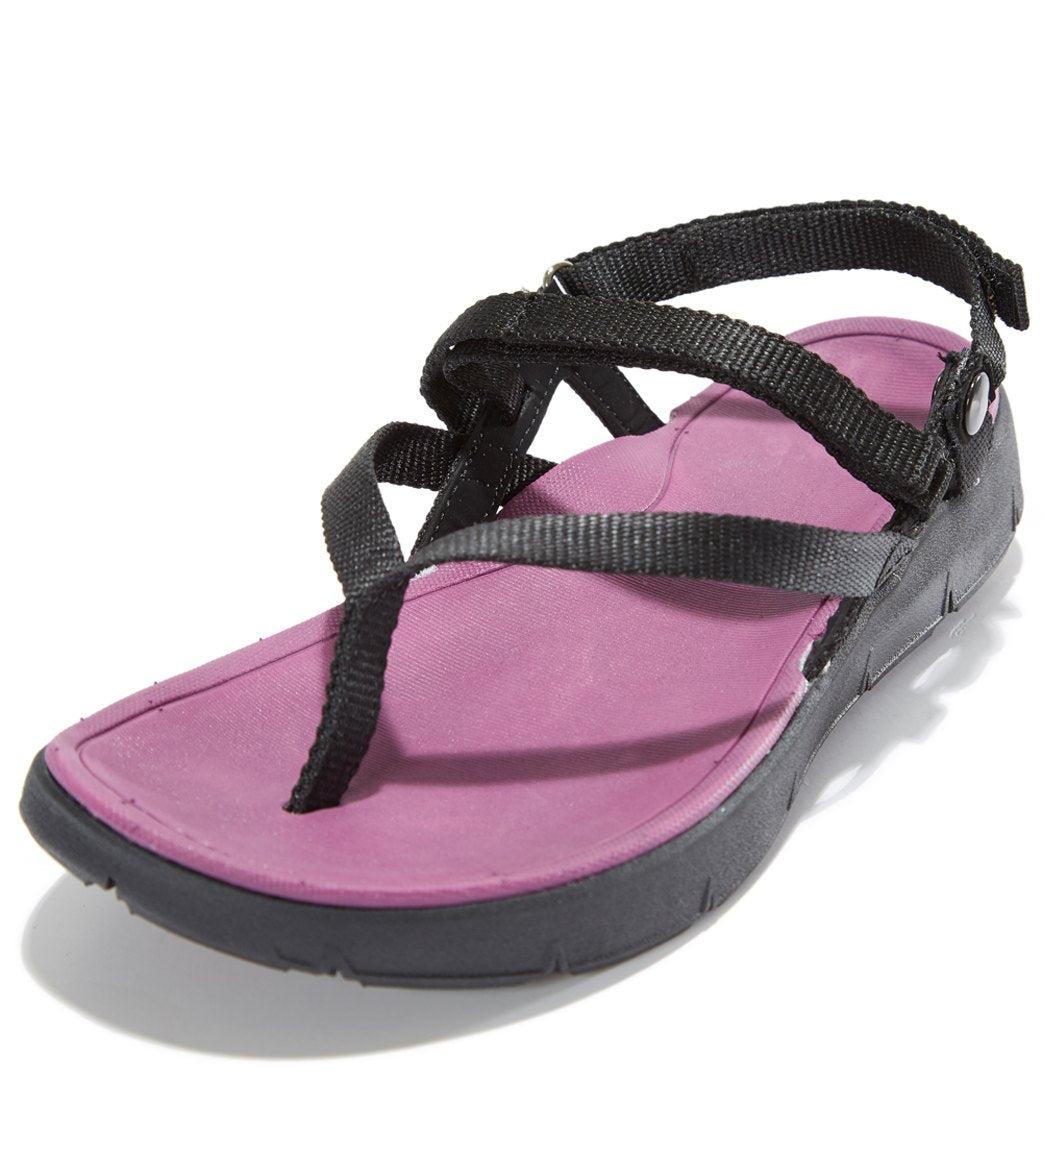 Northside Women's Sumatra Convertible Slides Sandals - Black/Berry 6 - Swimoutlet.com